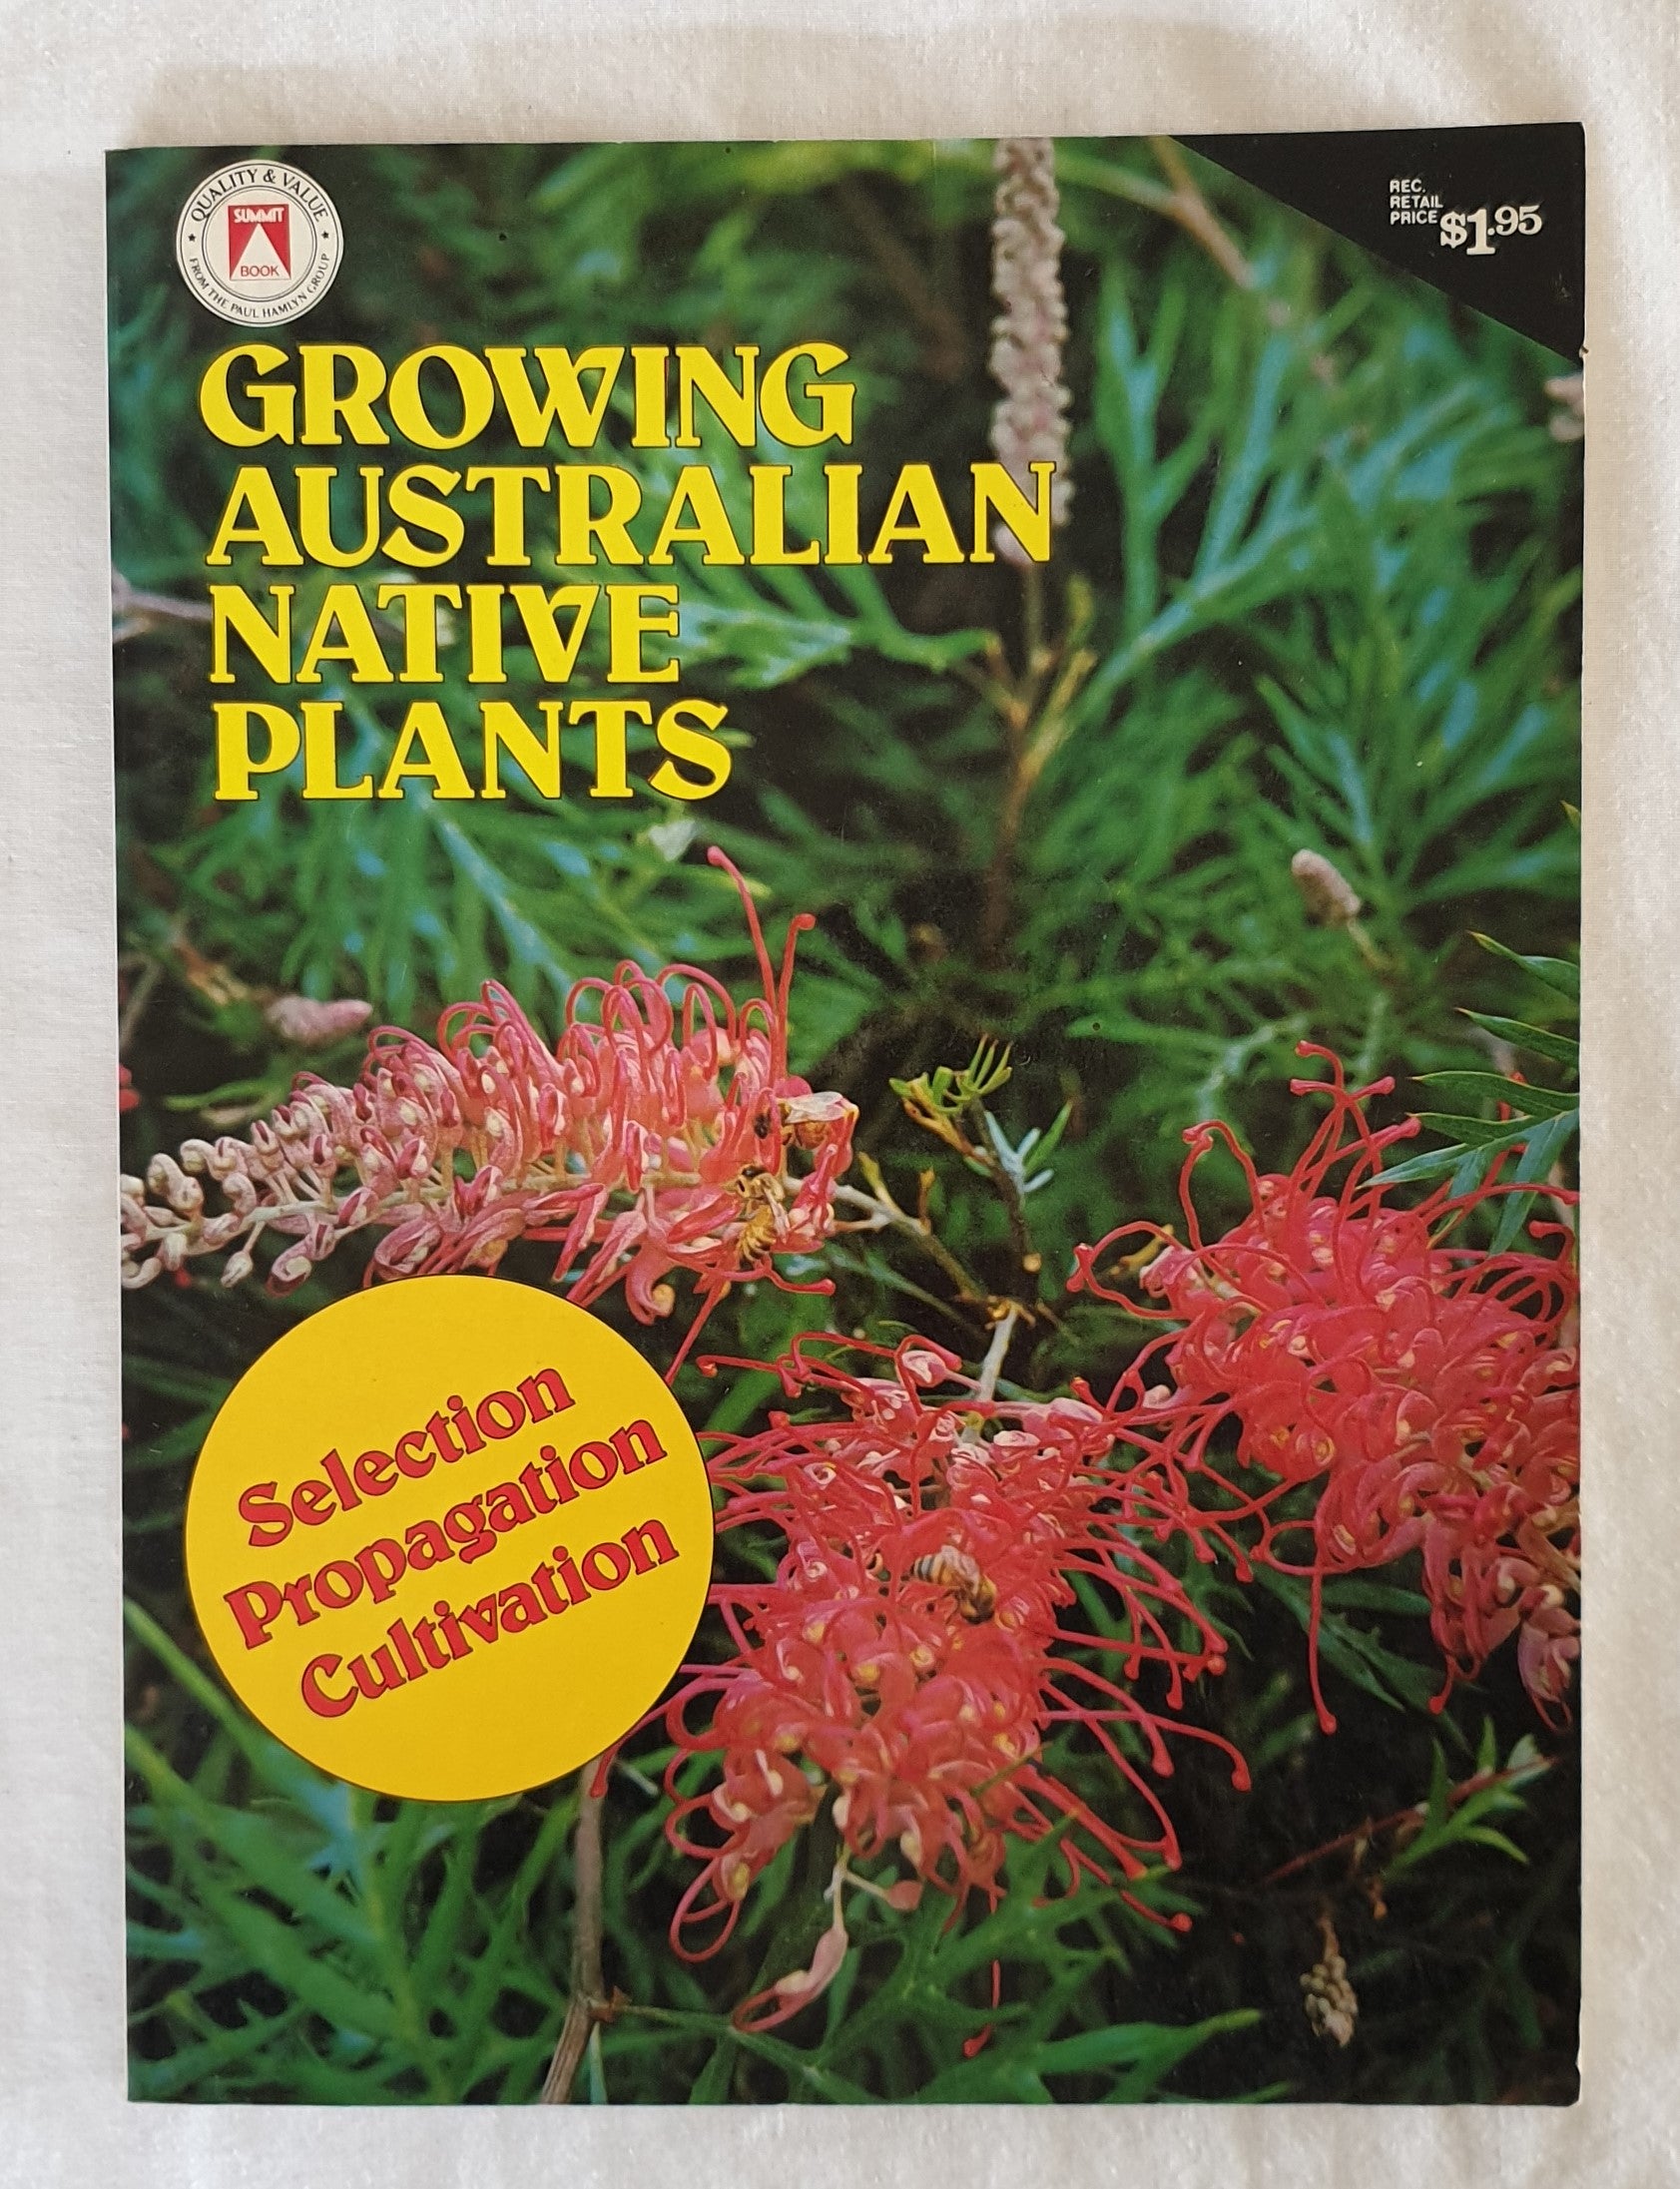 Growing Australian Native Plants by Margaret Masters